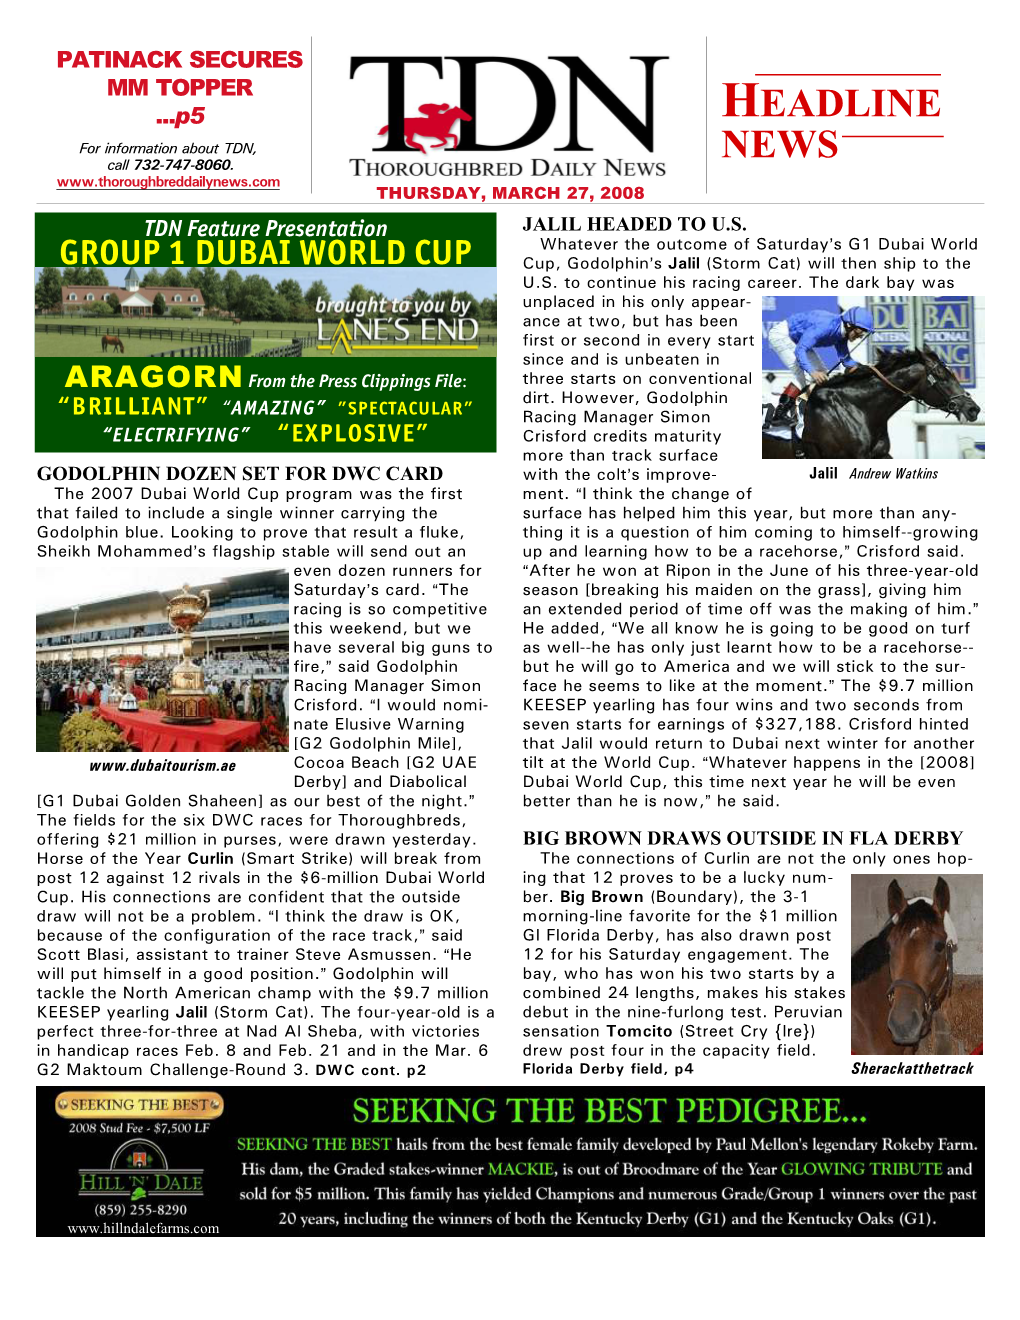 HEADLINE NEWS • 3/27/08 • PAGE 2 of 8